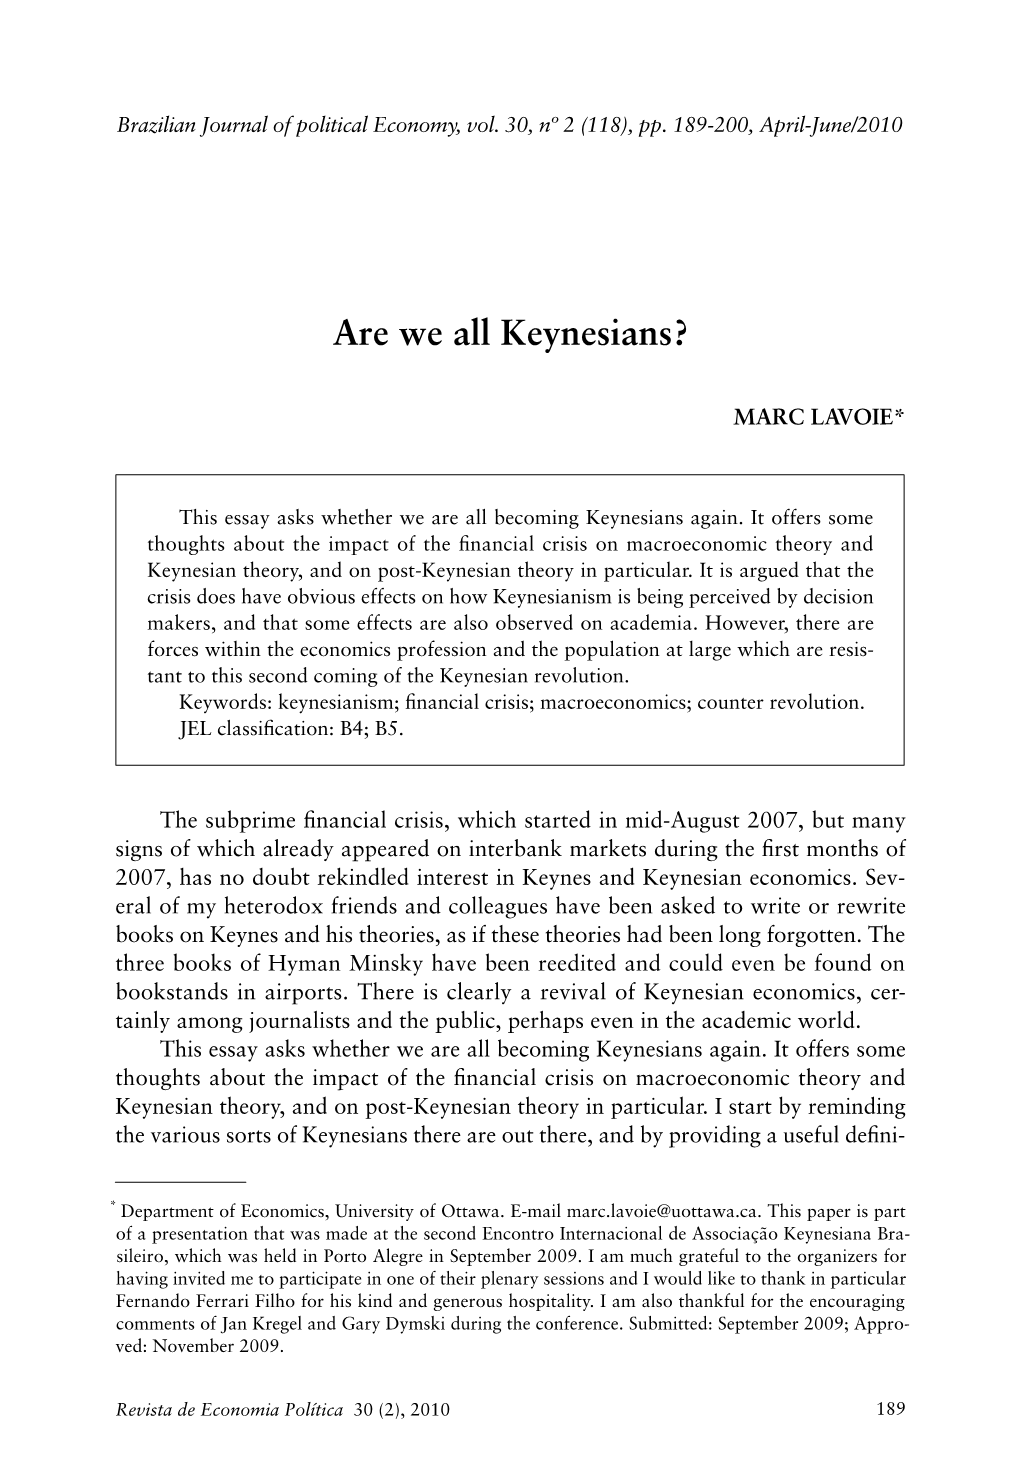 Are We All Keynesians?